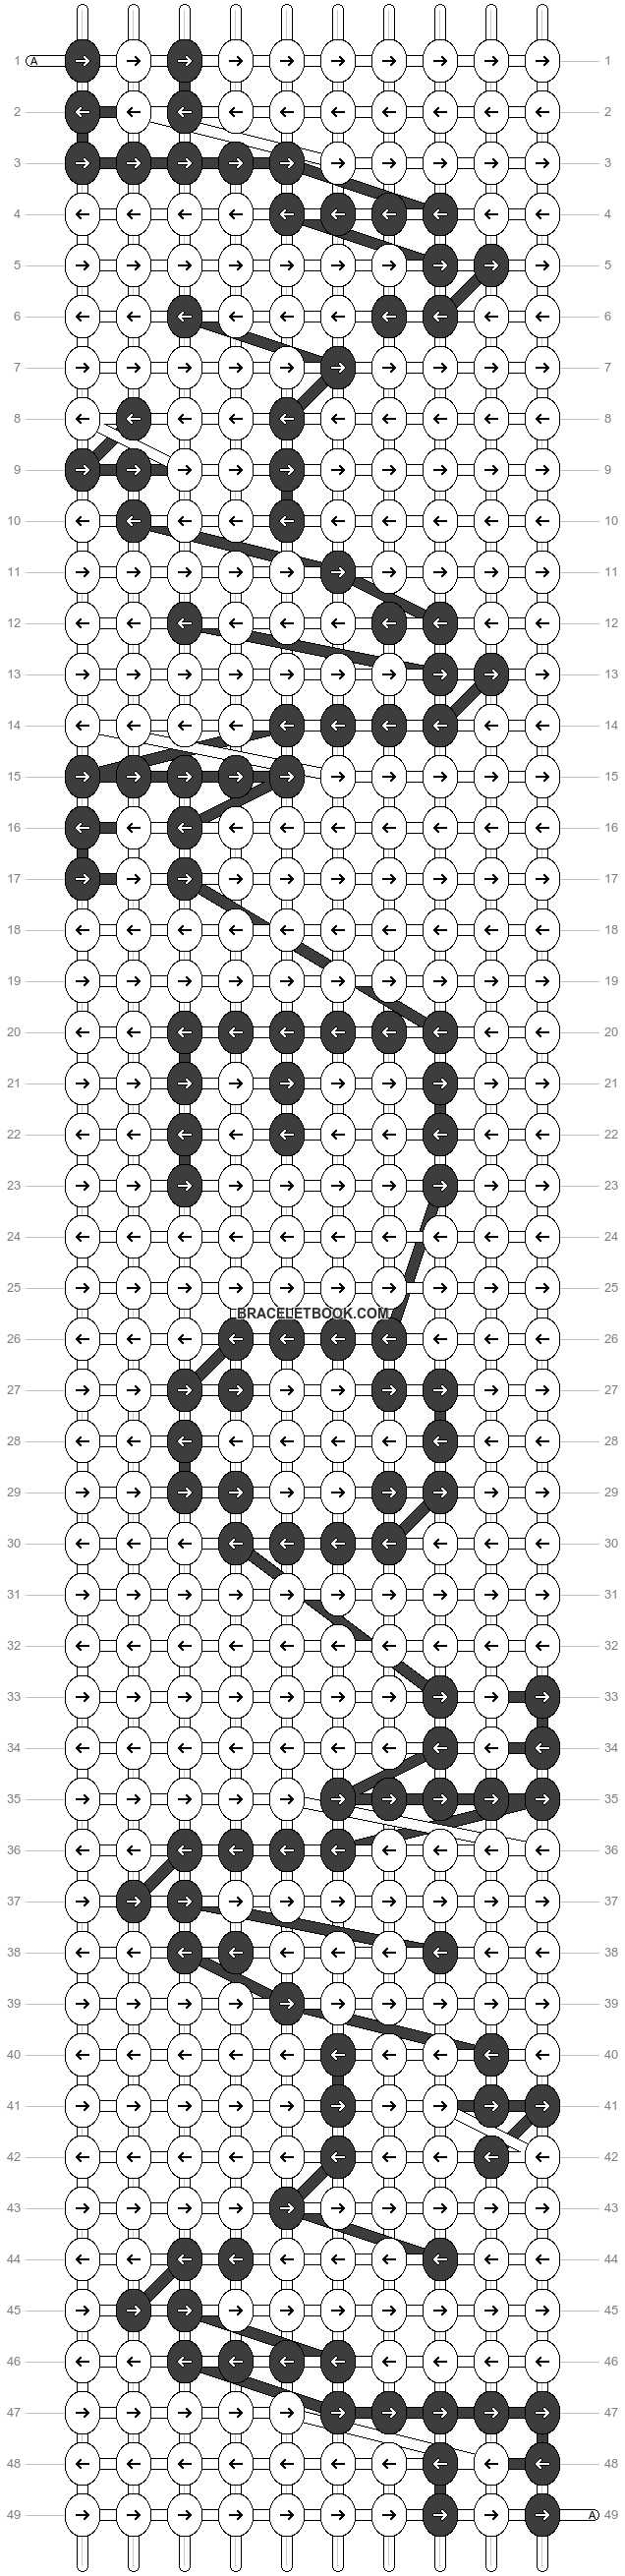 Alpha pattern #29169 variation #33338 pattern